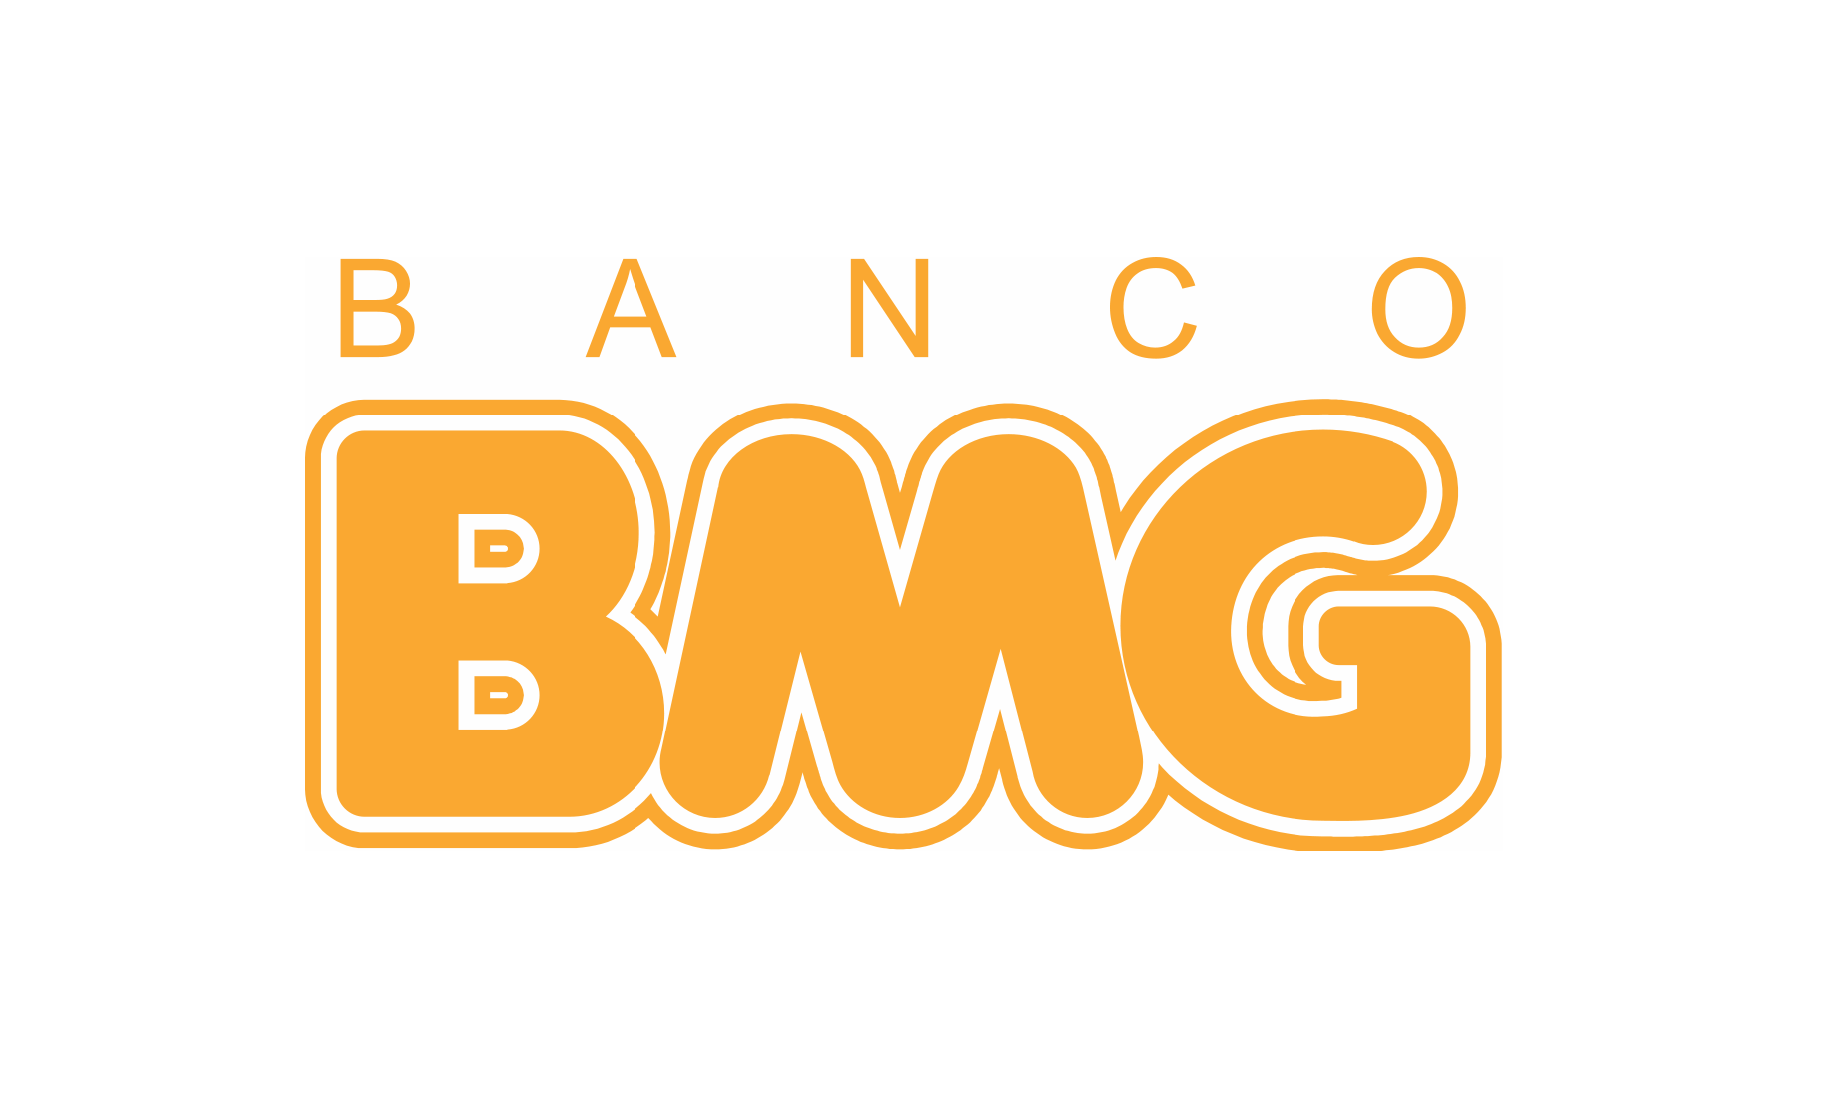 Empréstimo BMG